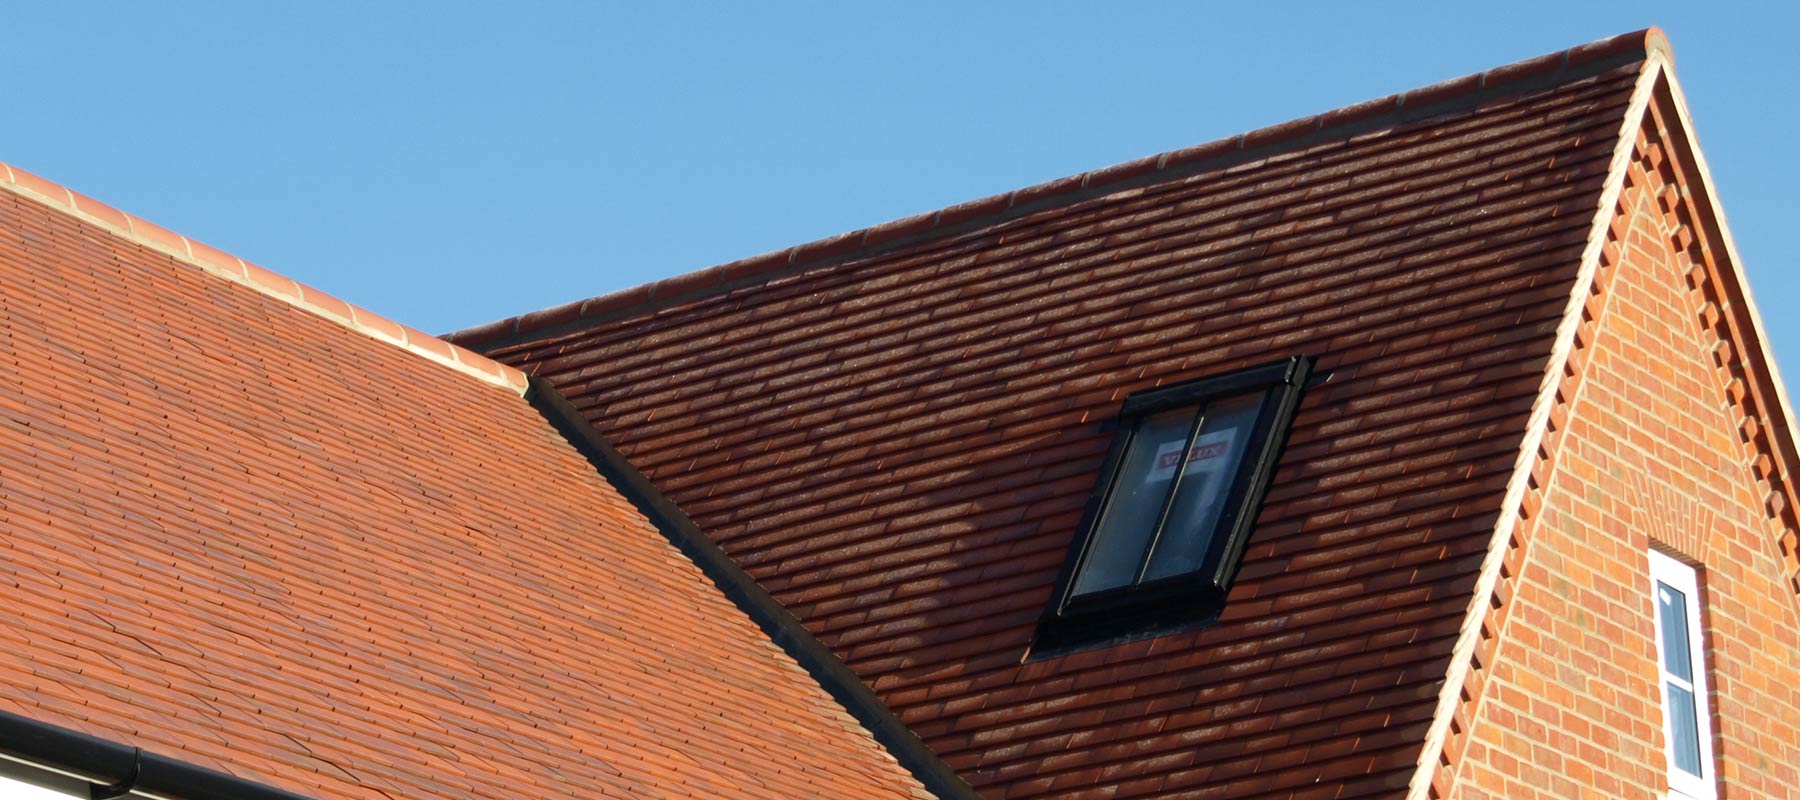 Paul Nunn Roofing Ltd-Roofing Contractors-Roof Repairs-Bury St Edmunds-Ipswich-Newmarket-Cambridge-Suffolk-Cambridgeshire